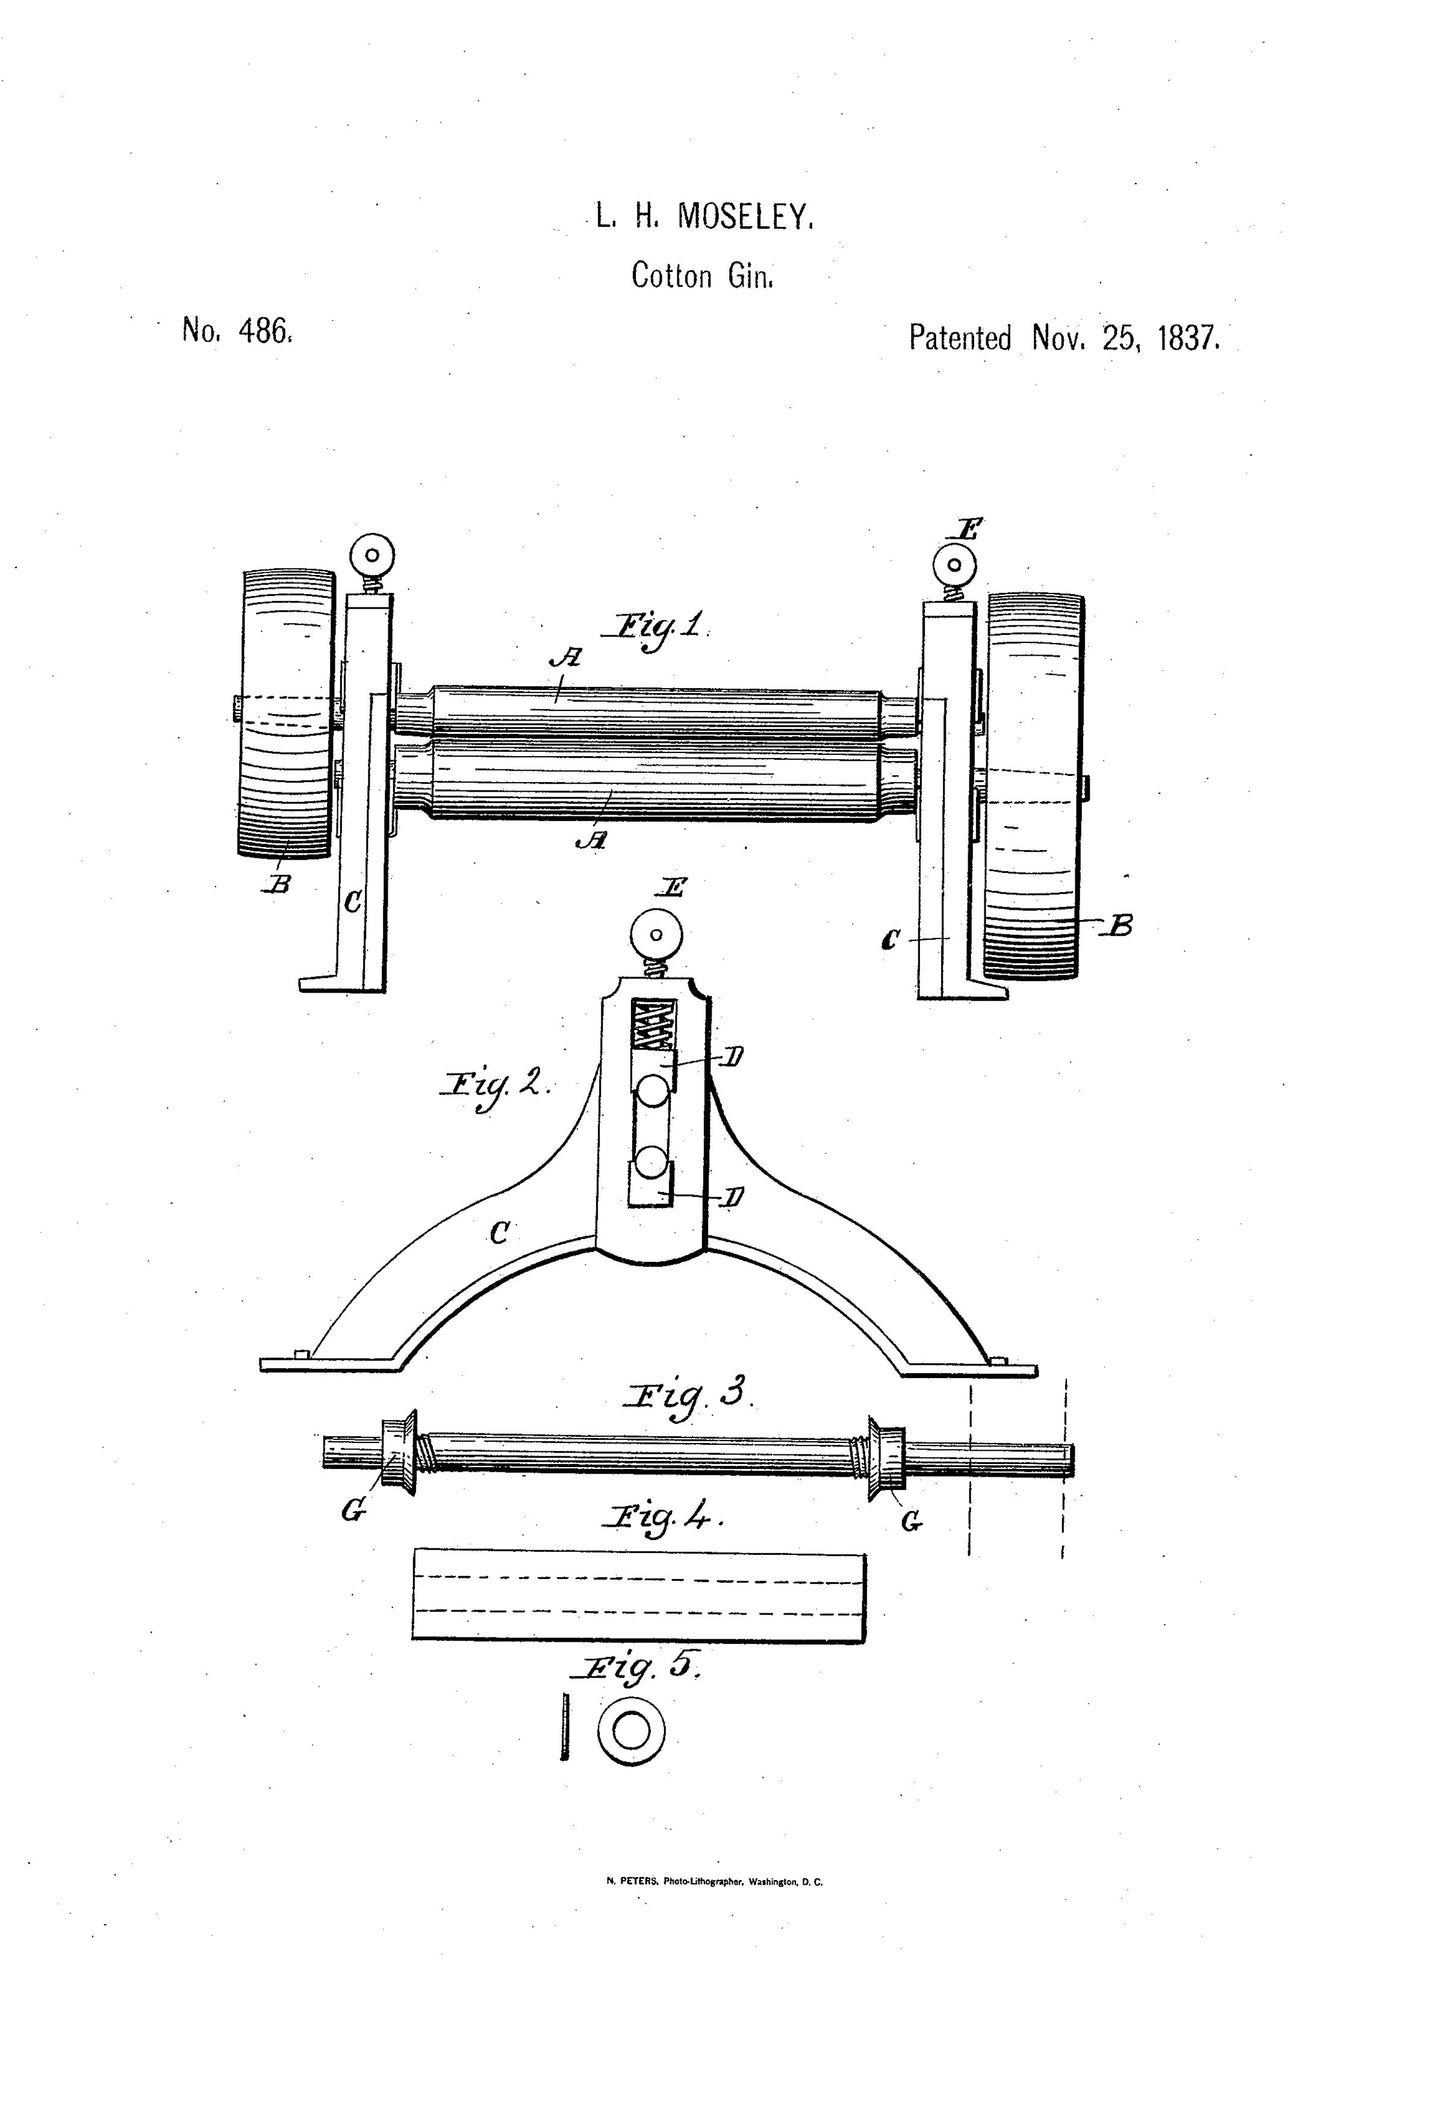 US General Single Patents Set 4 [144 Images]